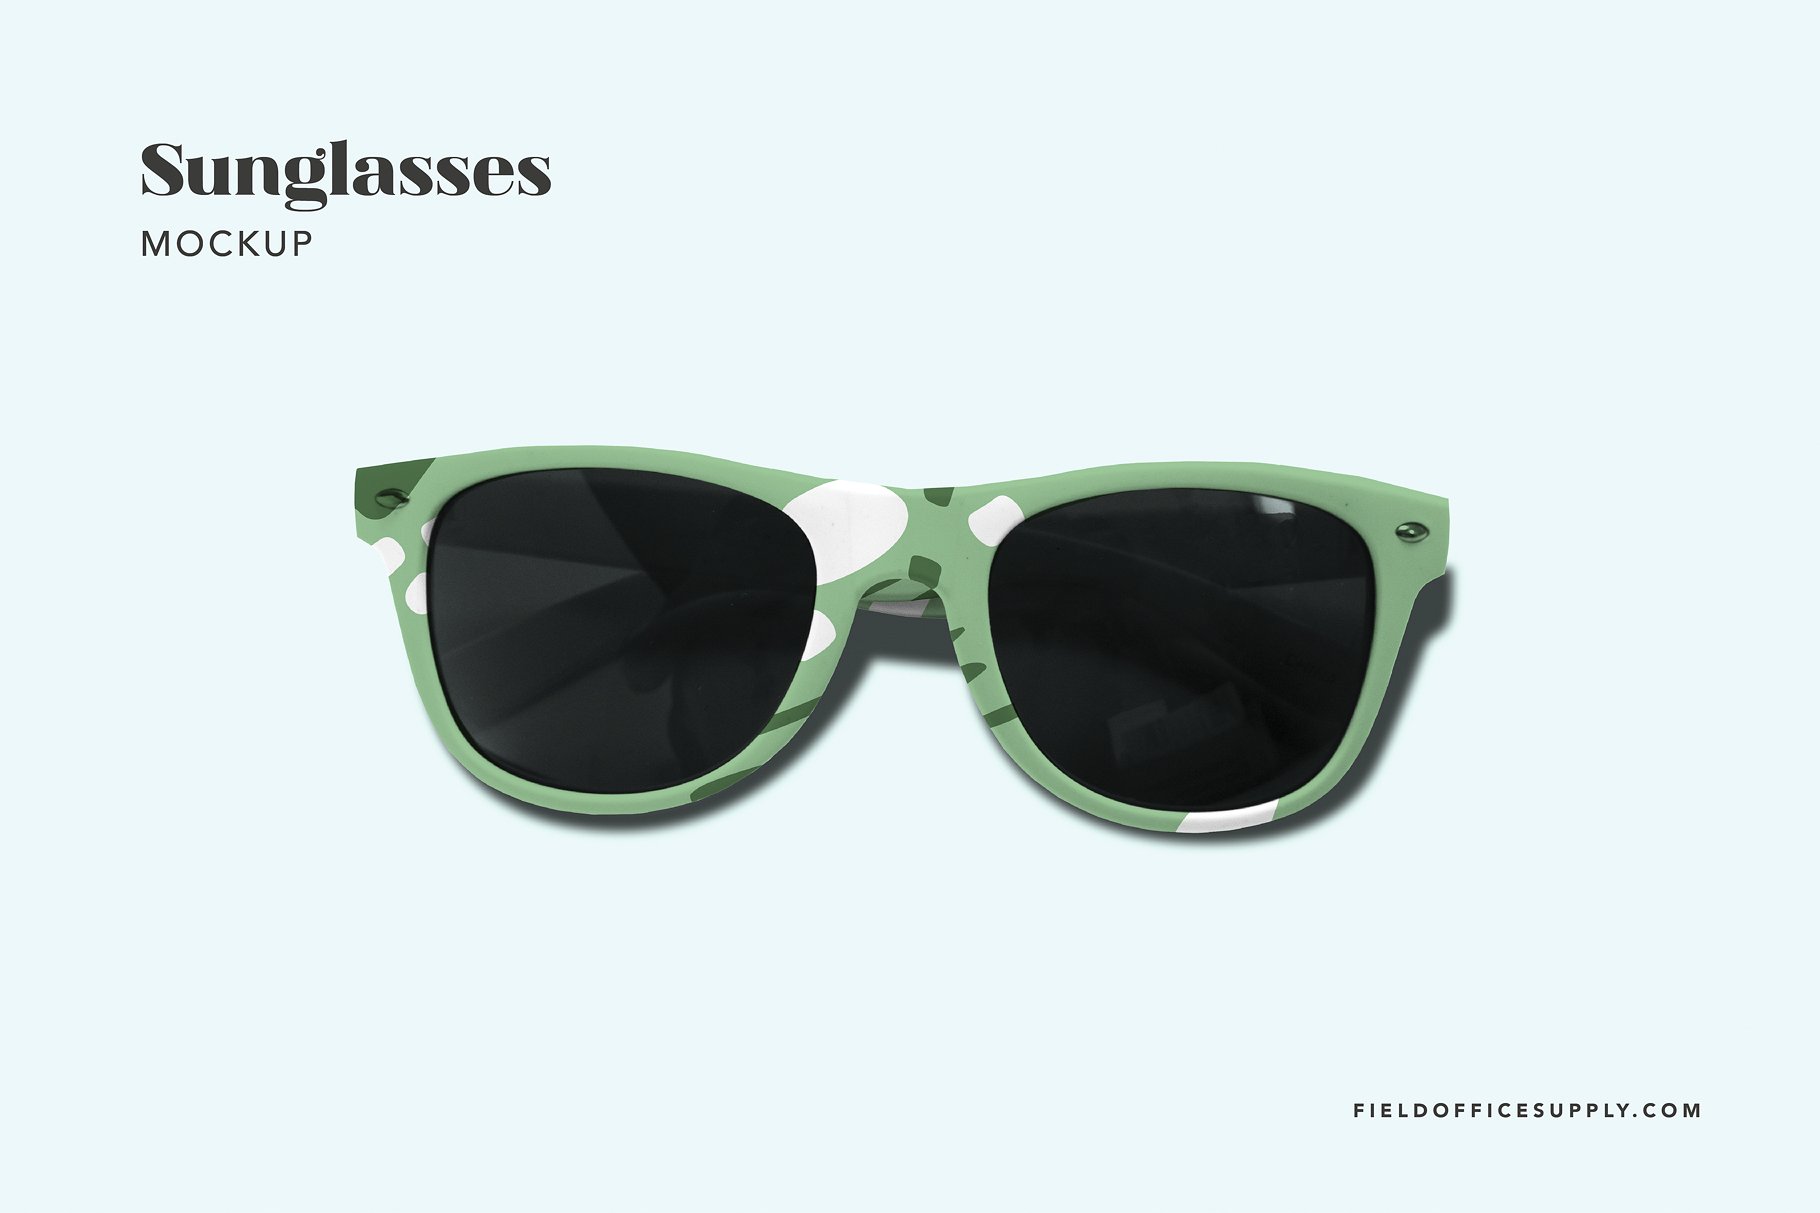 10 Elegant Sunglasses Psd Mockup Templates Decolore Net